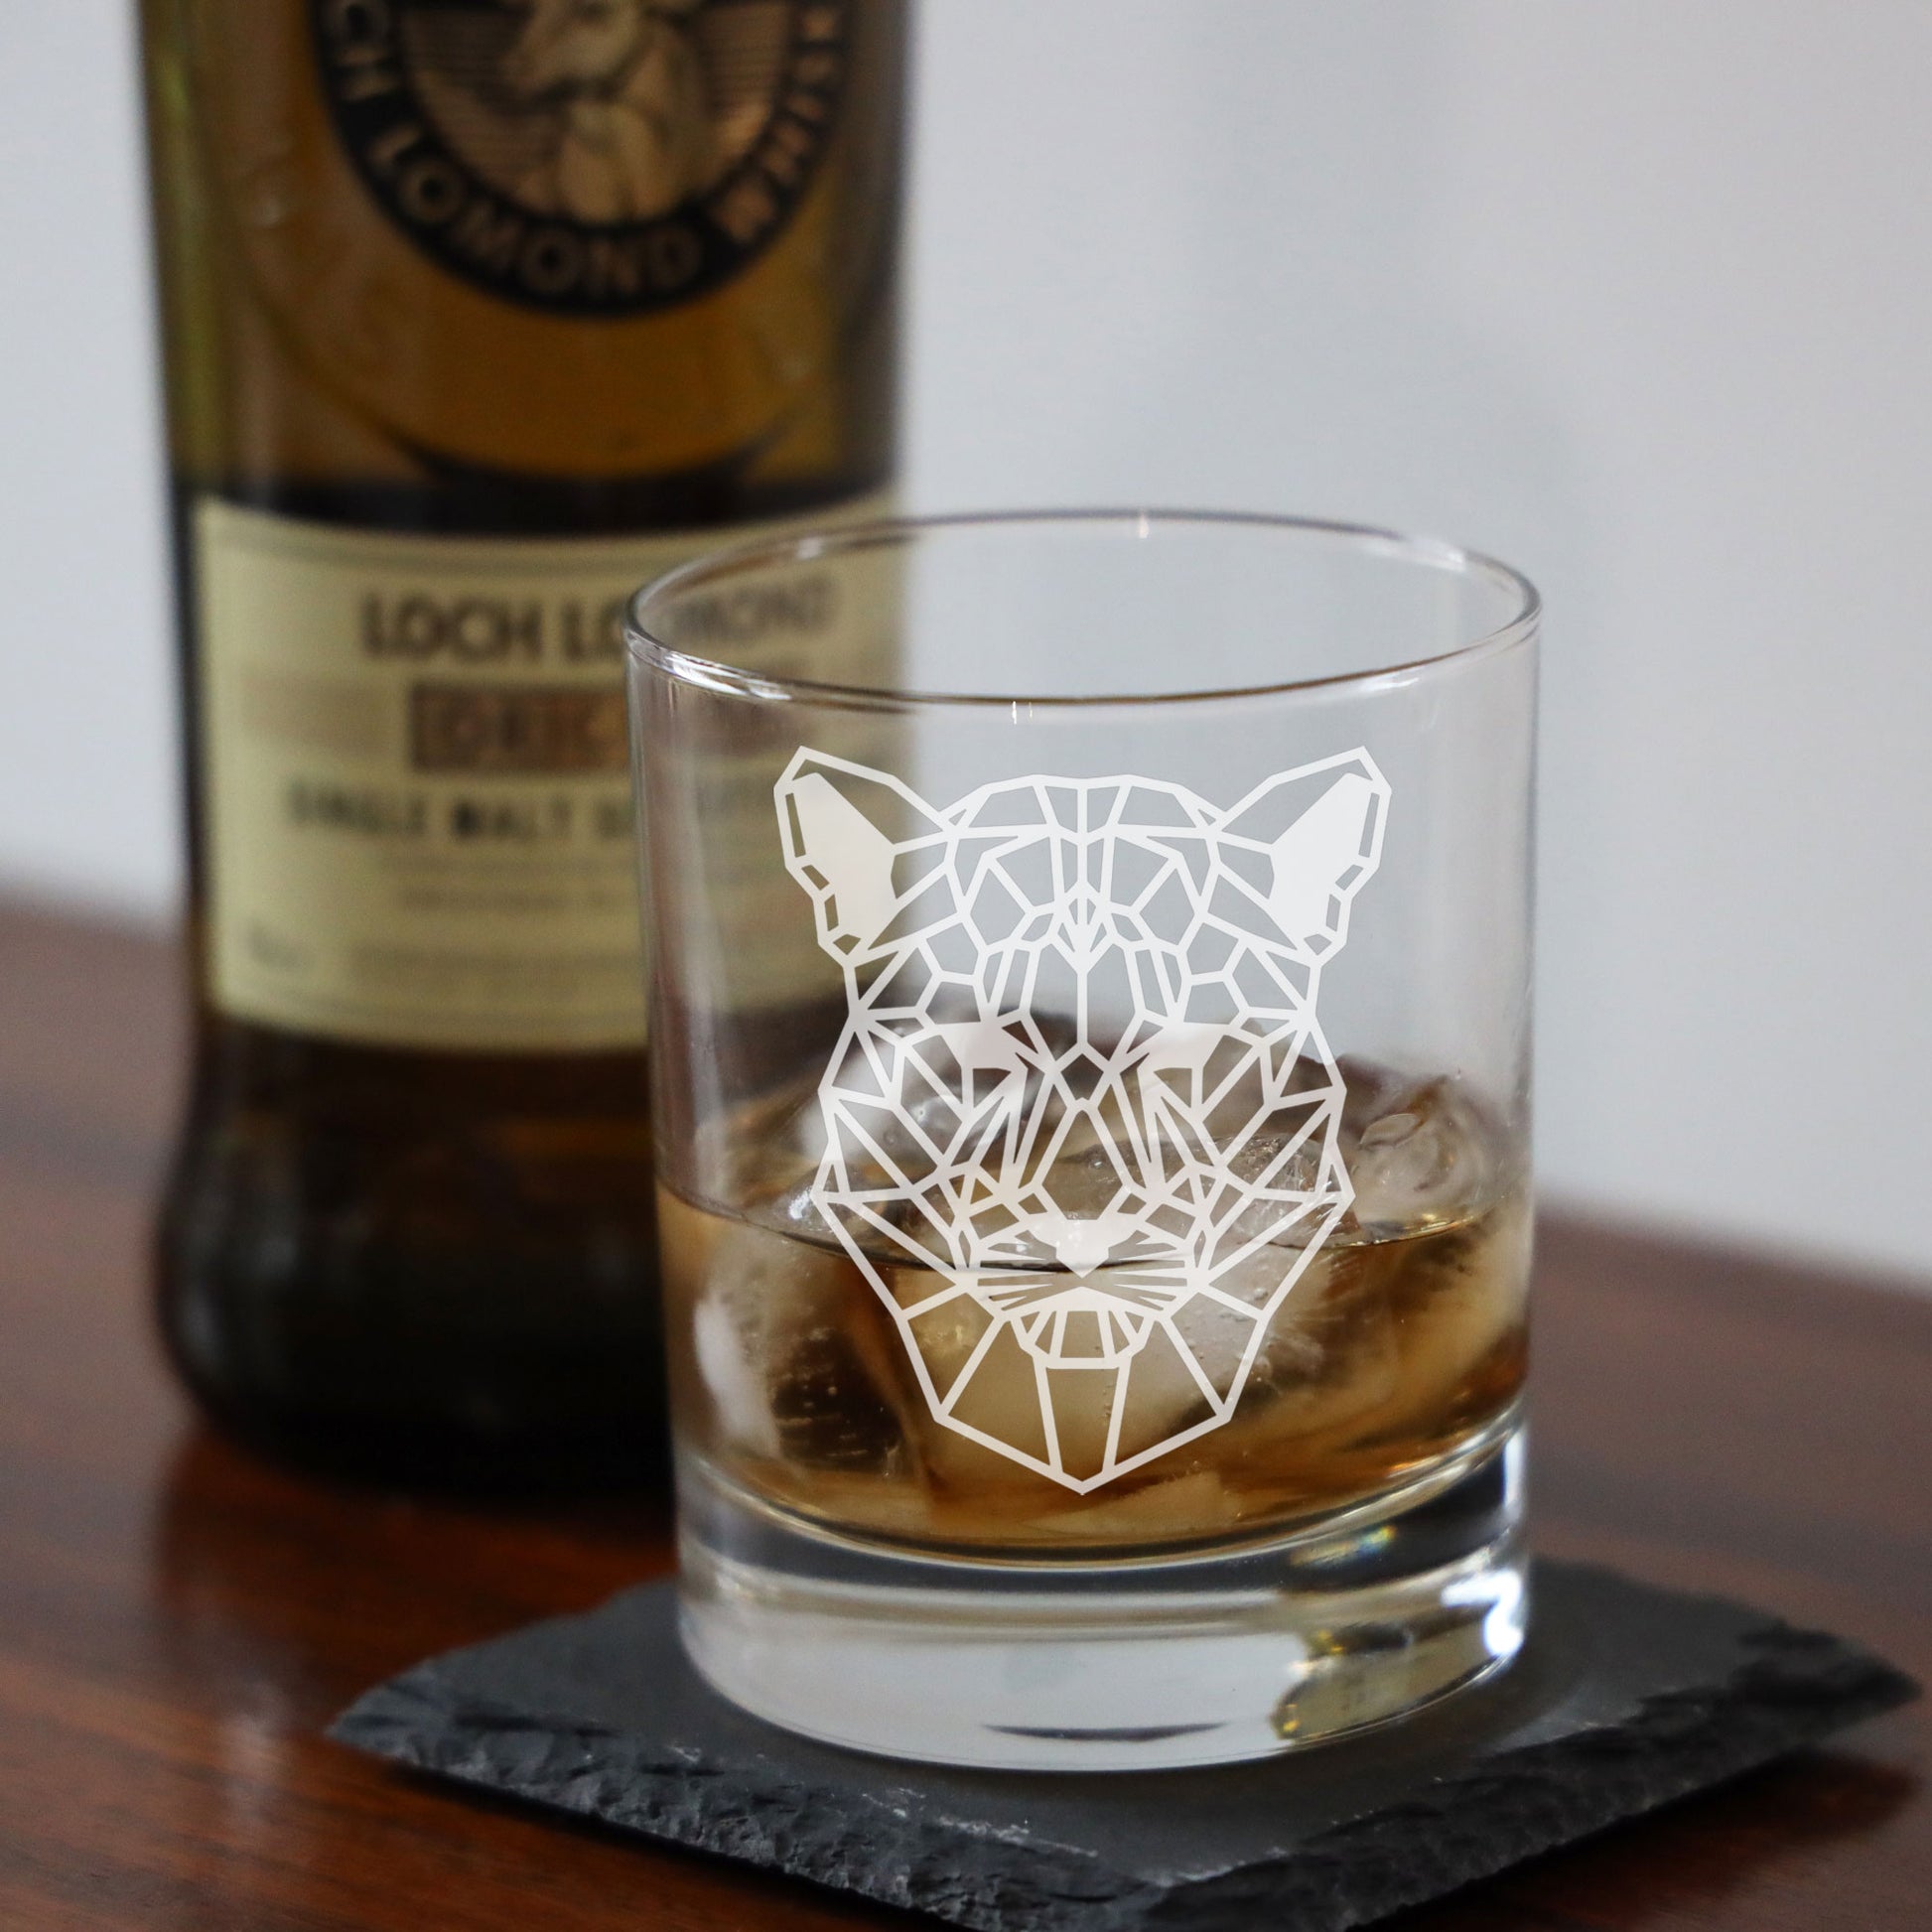 Jaguar Engraved Whisky Glass  - Always Looking Good -   